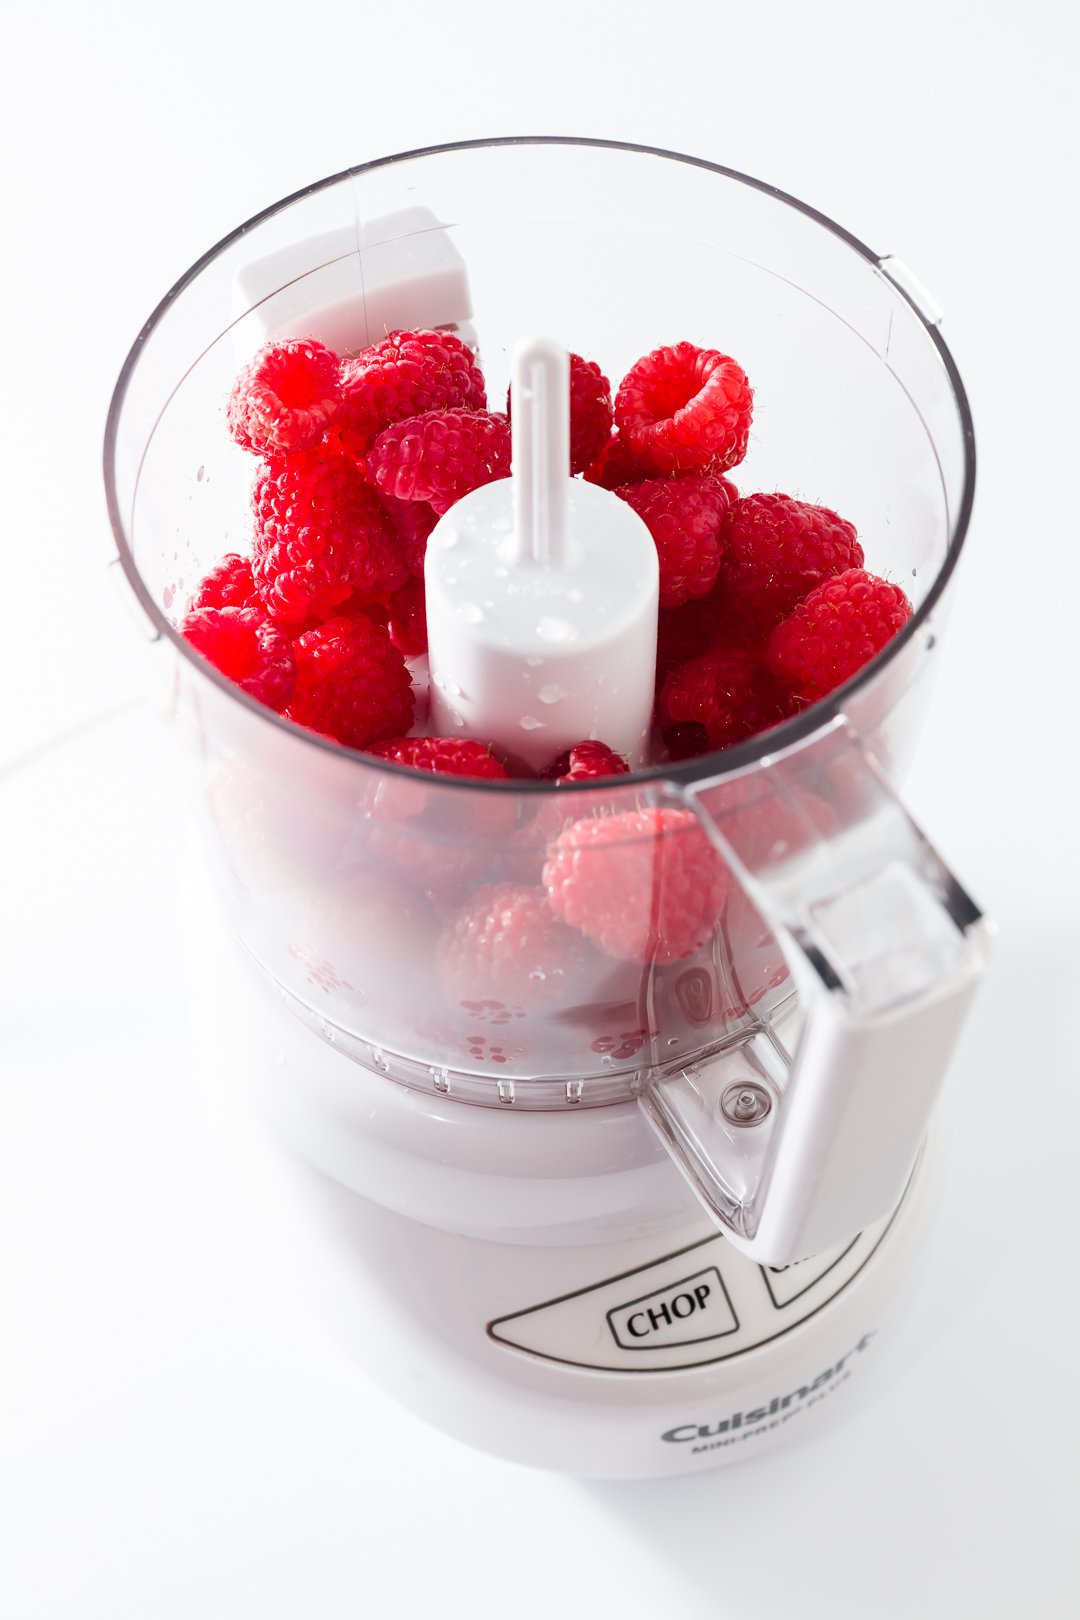 Raspberries in a food processor